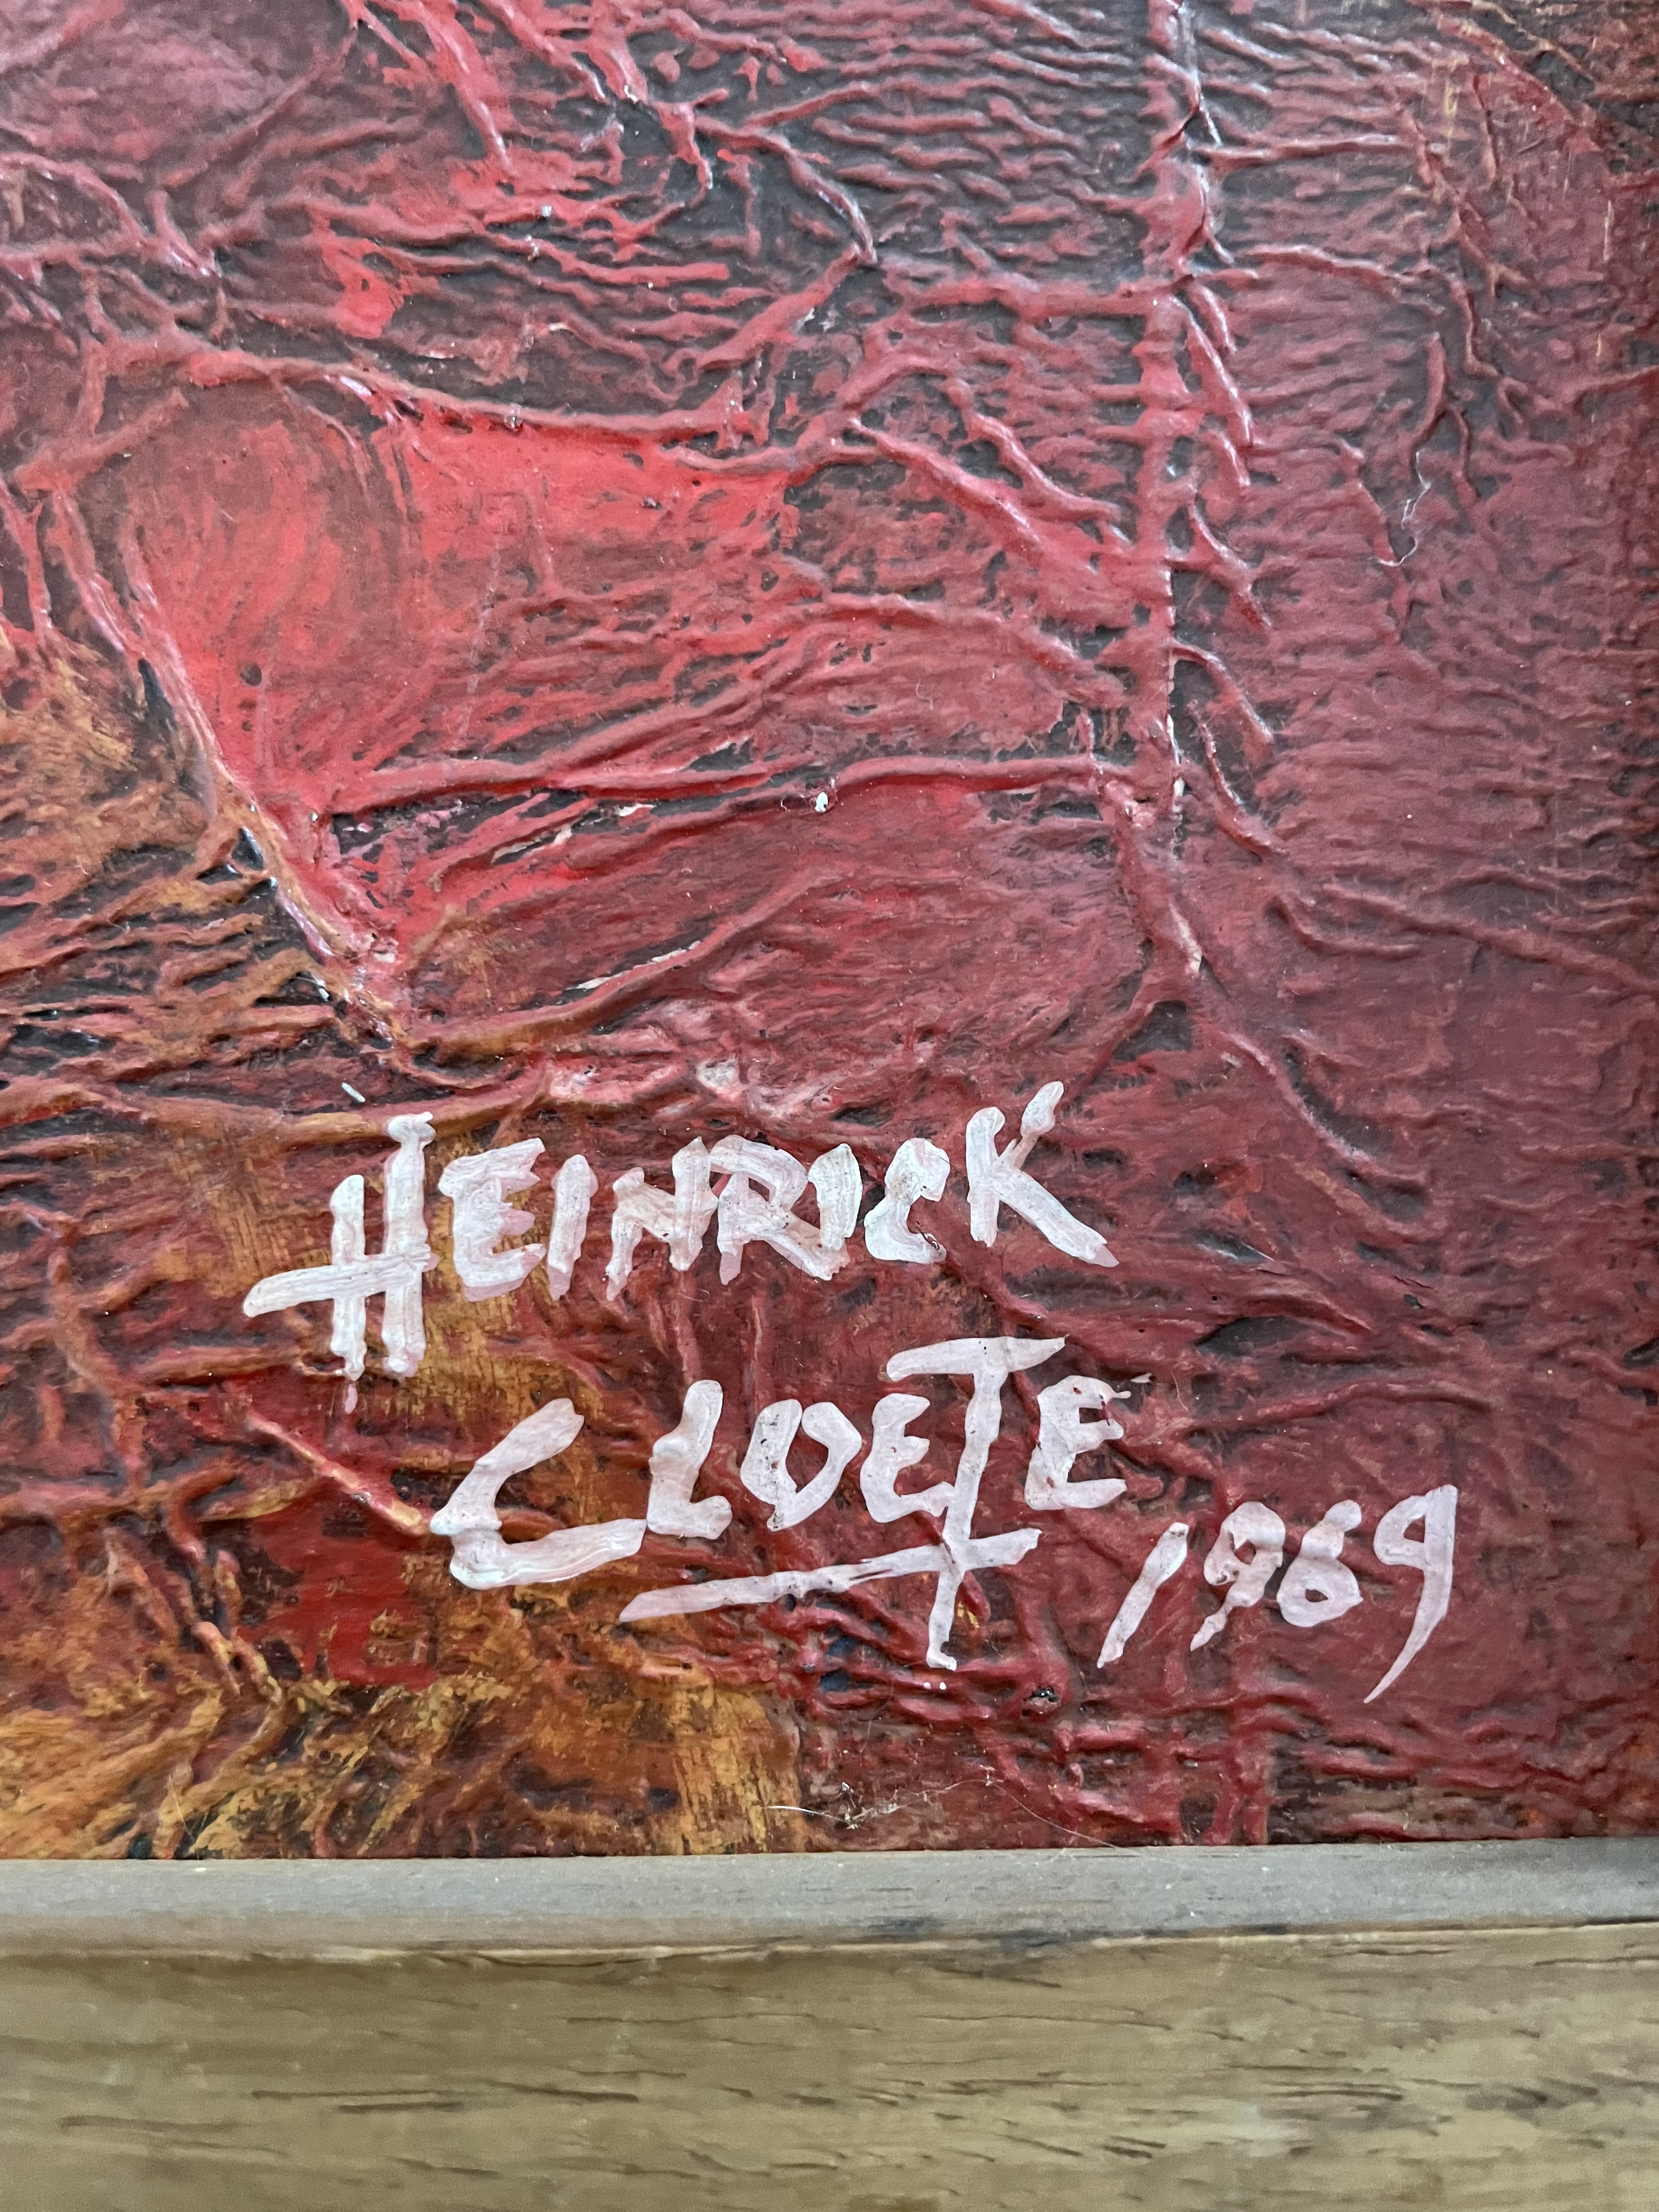 Heinrick Cloete Original - Image 2 of 3